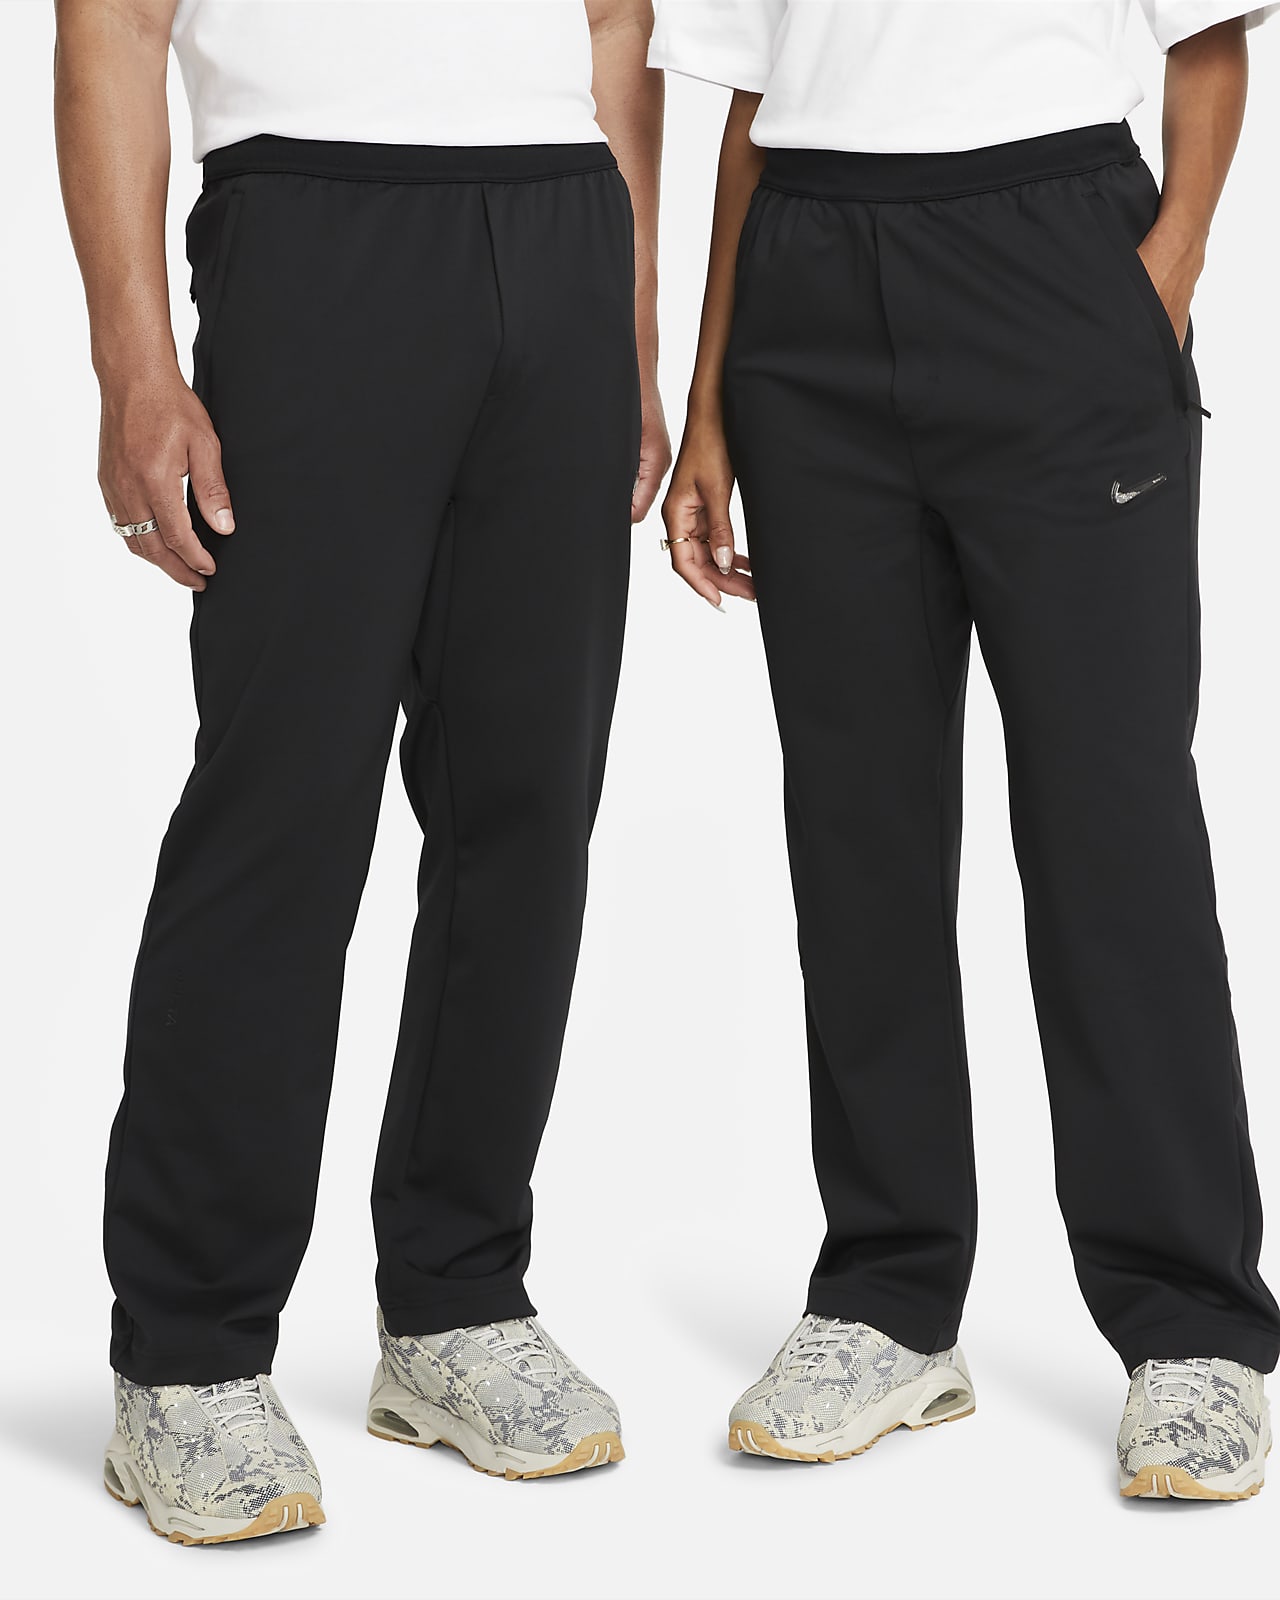 NOCTA Men's Single-Leg Basketball Tights (Left). Nike JP